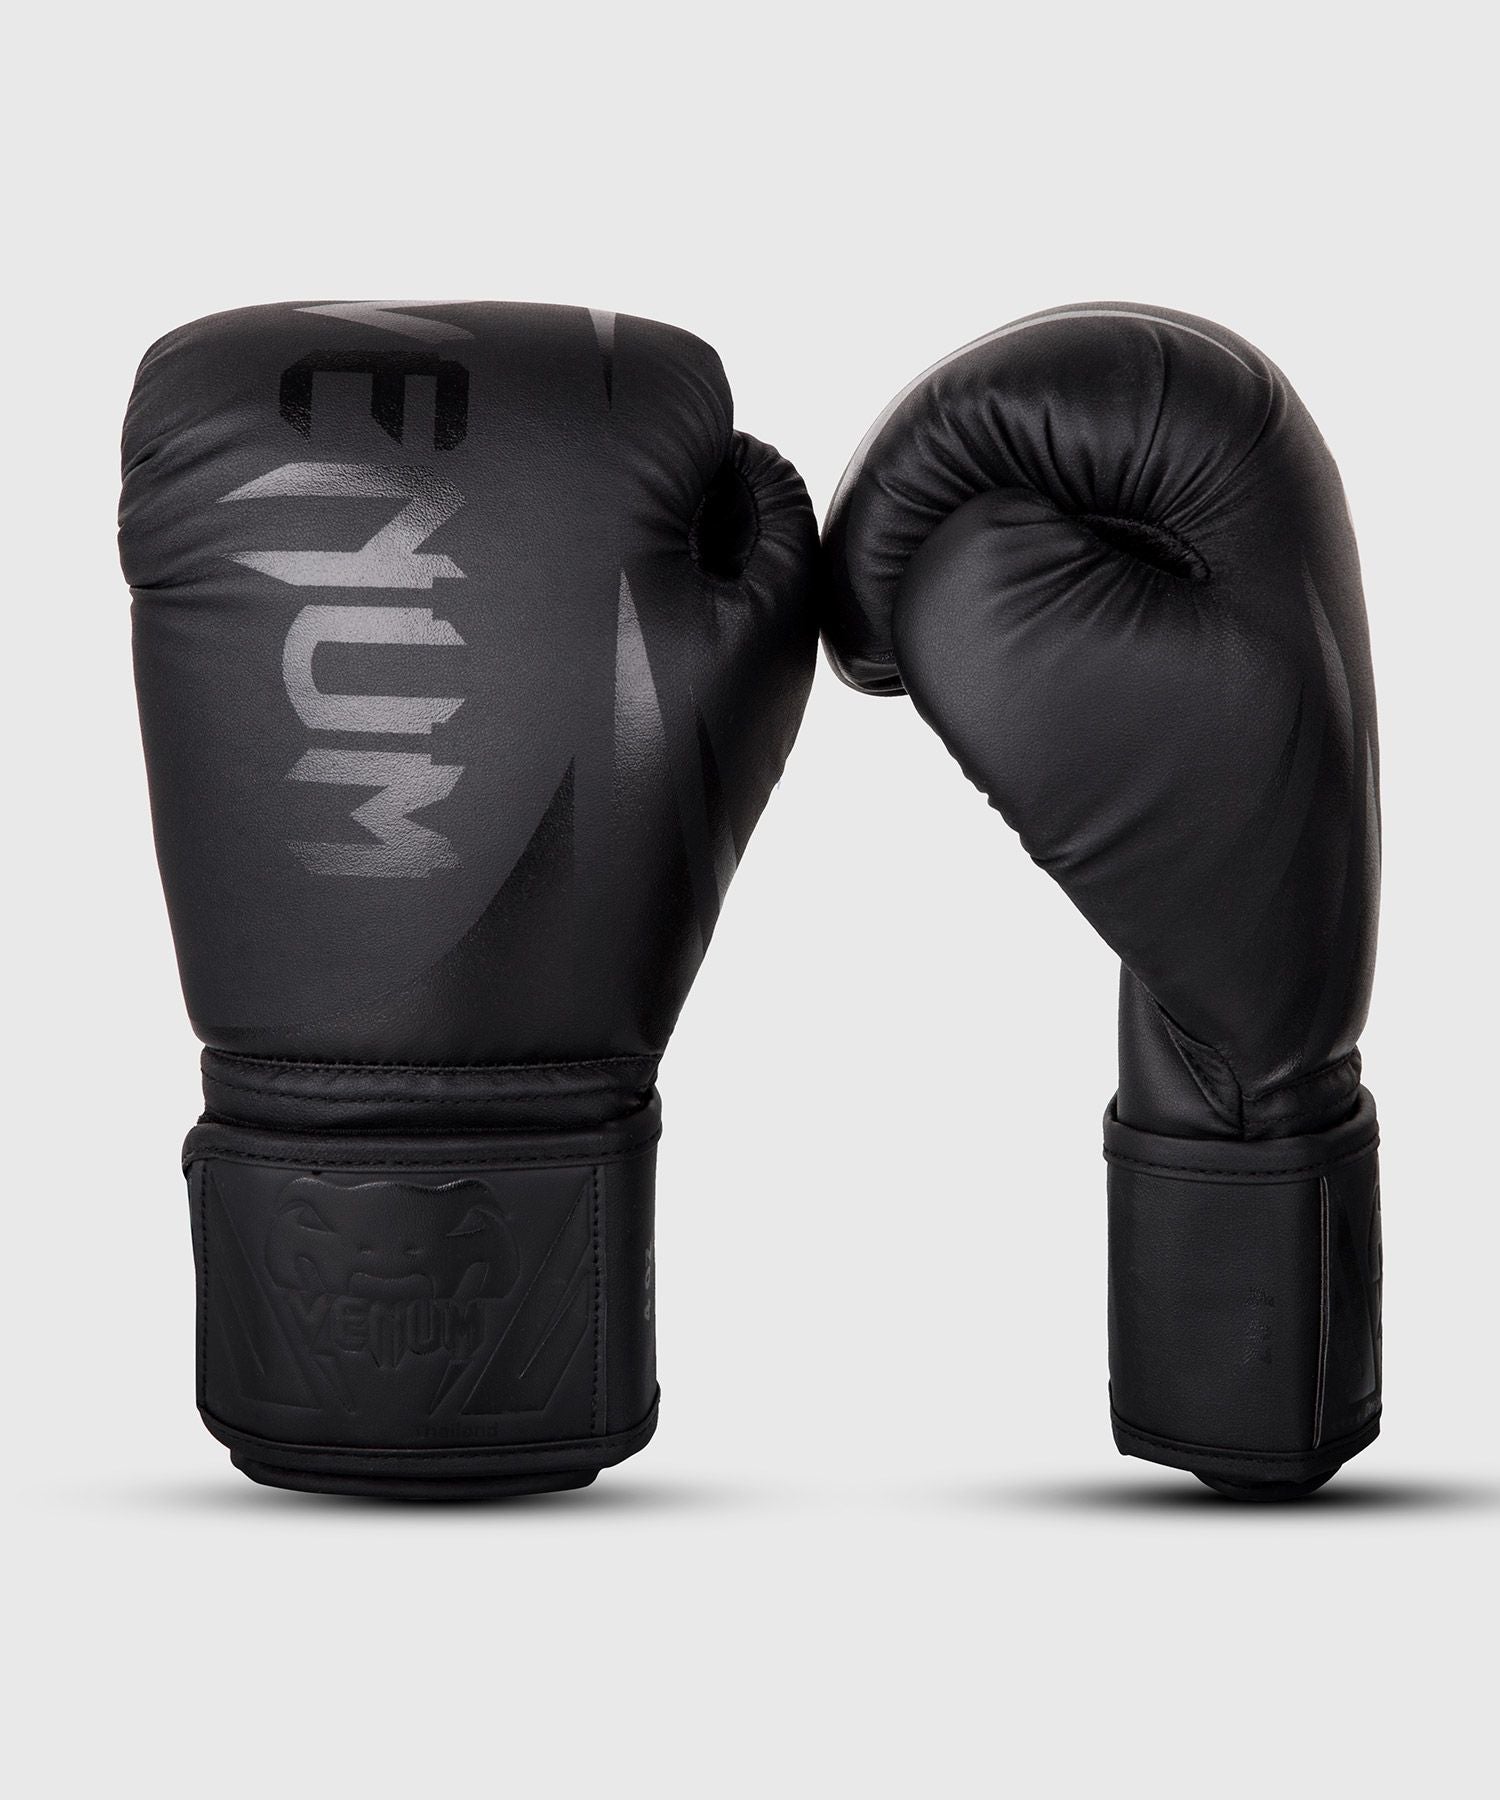 Venum Kids Boxing Gloves Challenger 2.0 - Black